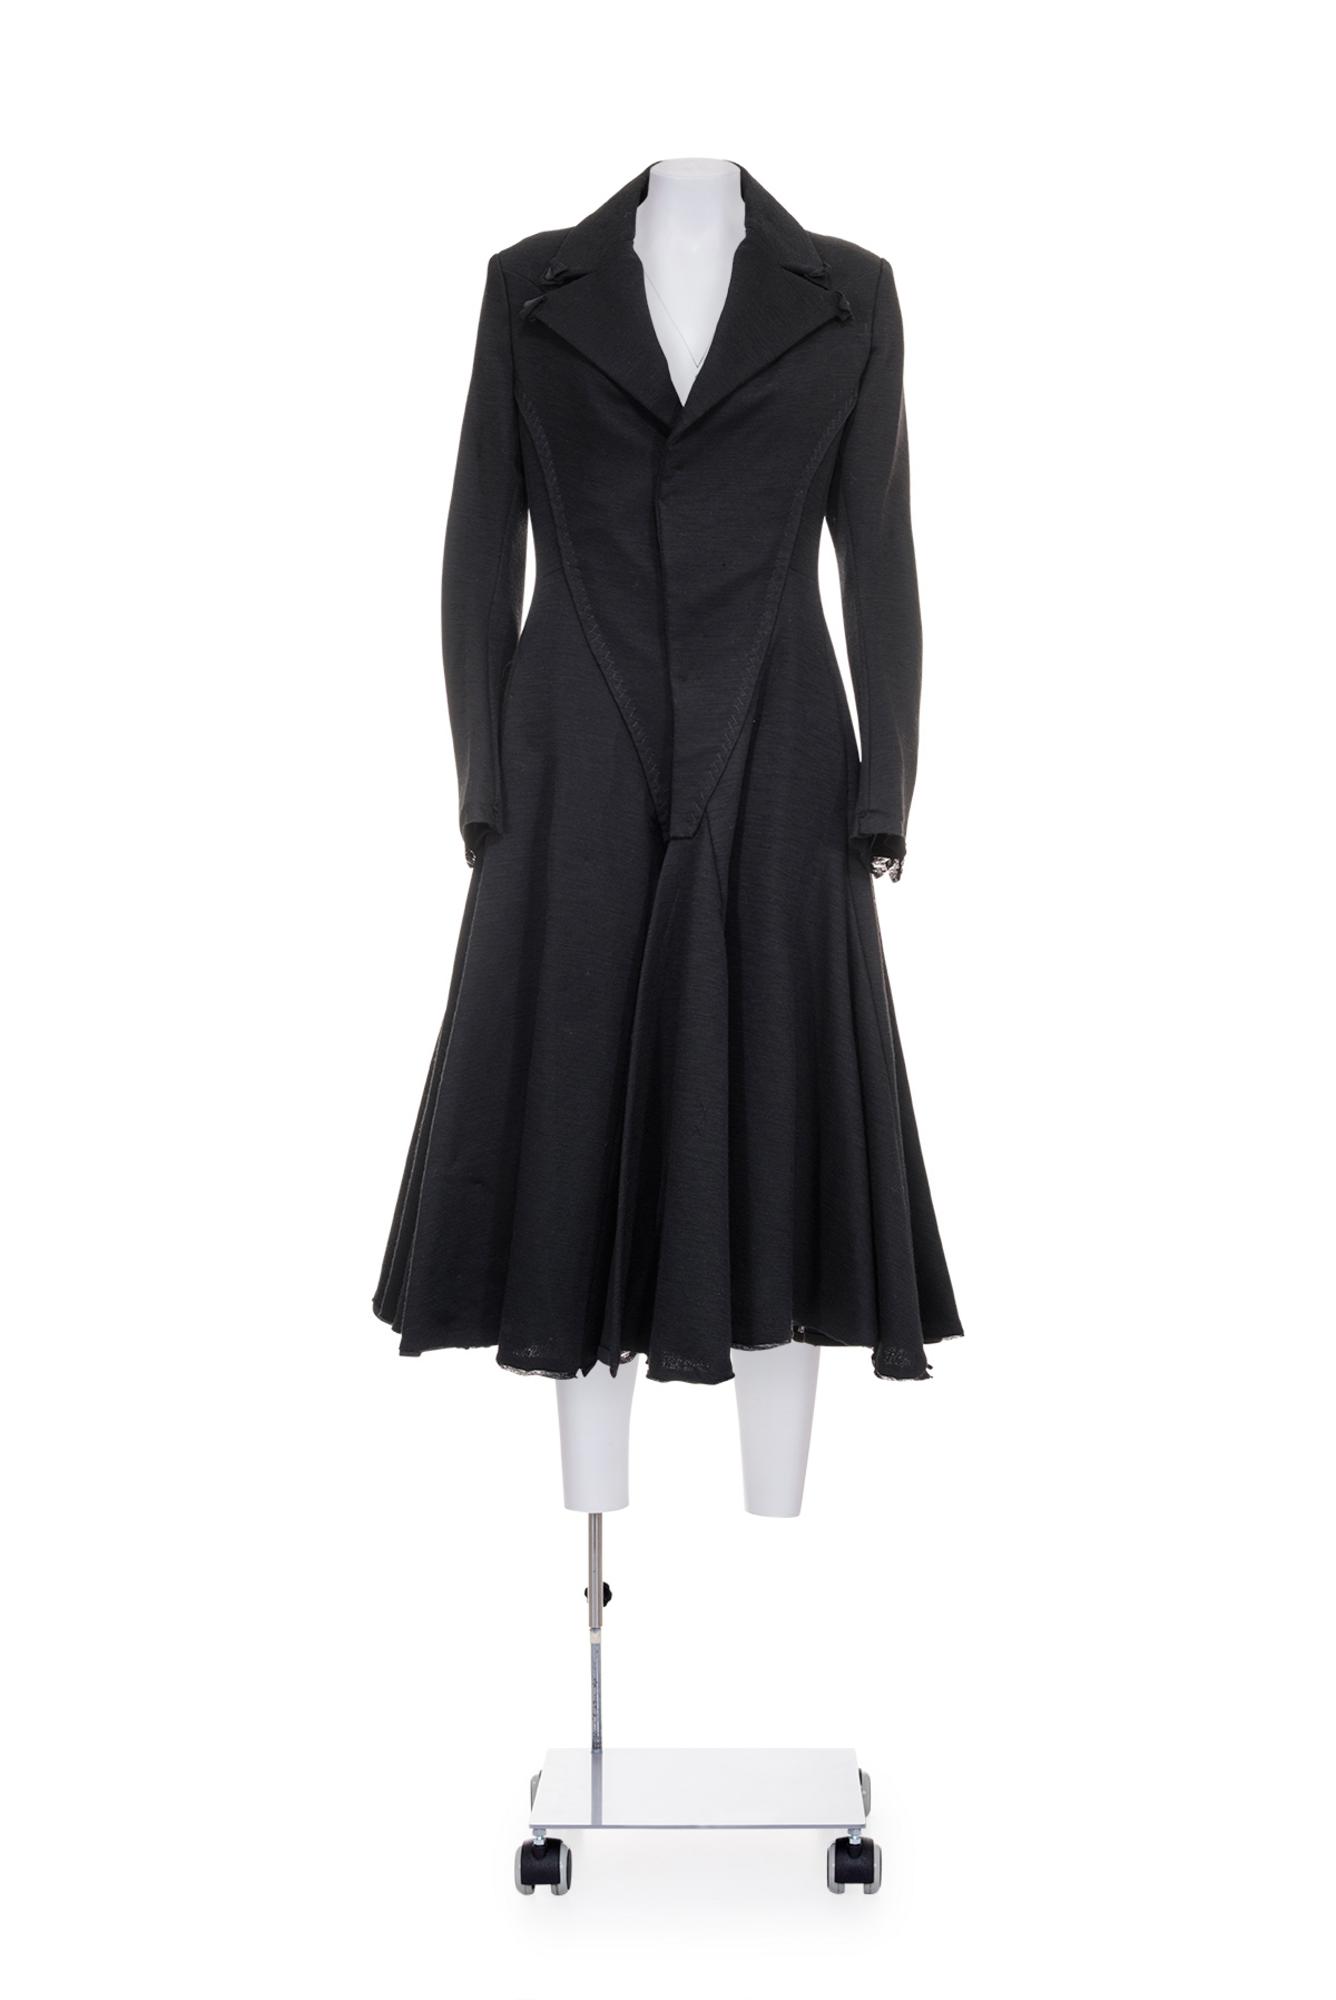 YOHJI YAMAMOTO Wool jersey redingote coat DESCRIPTION: Black wool jersey...